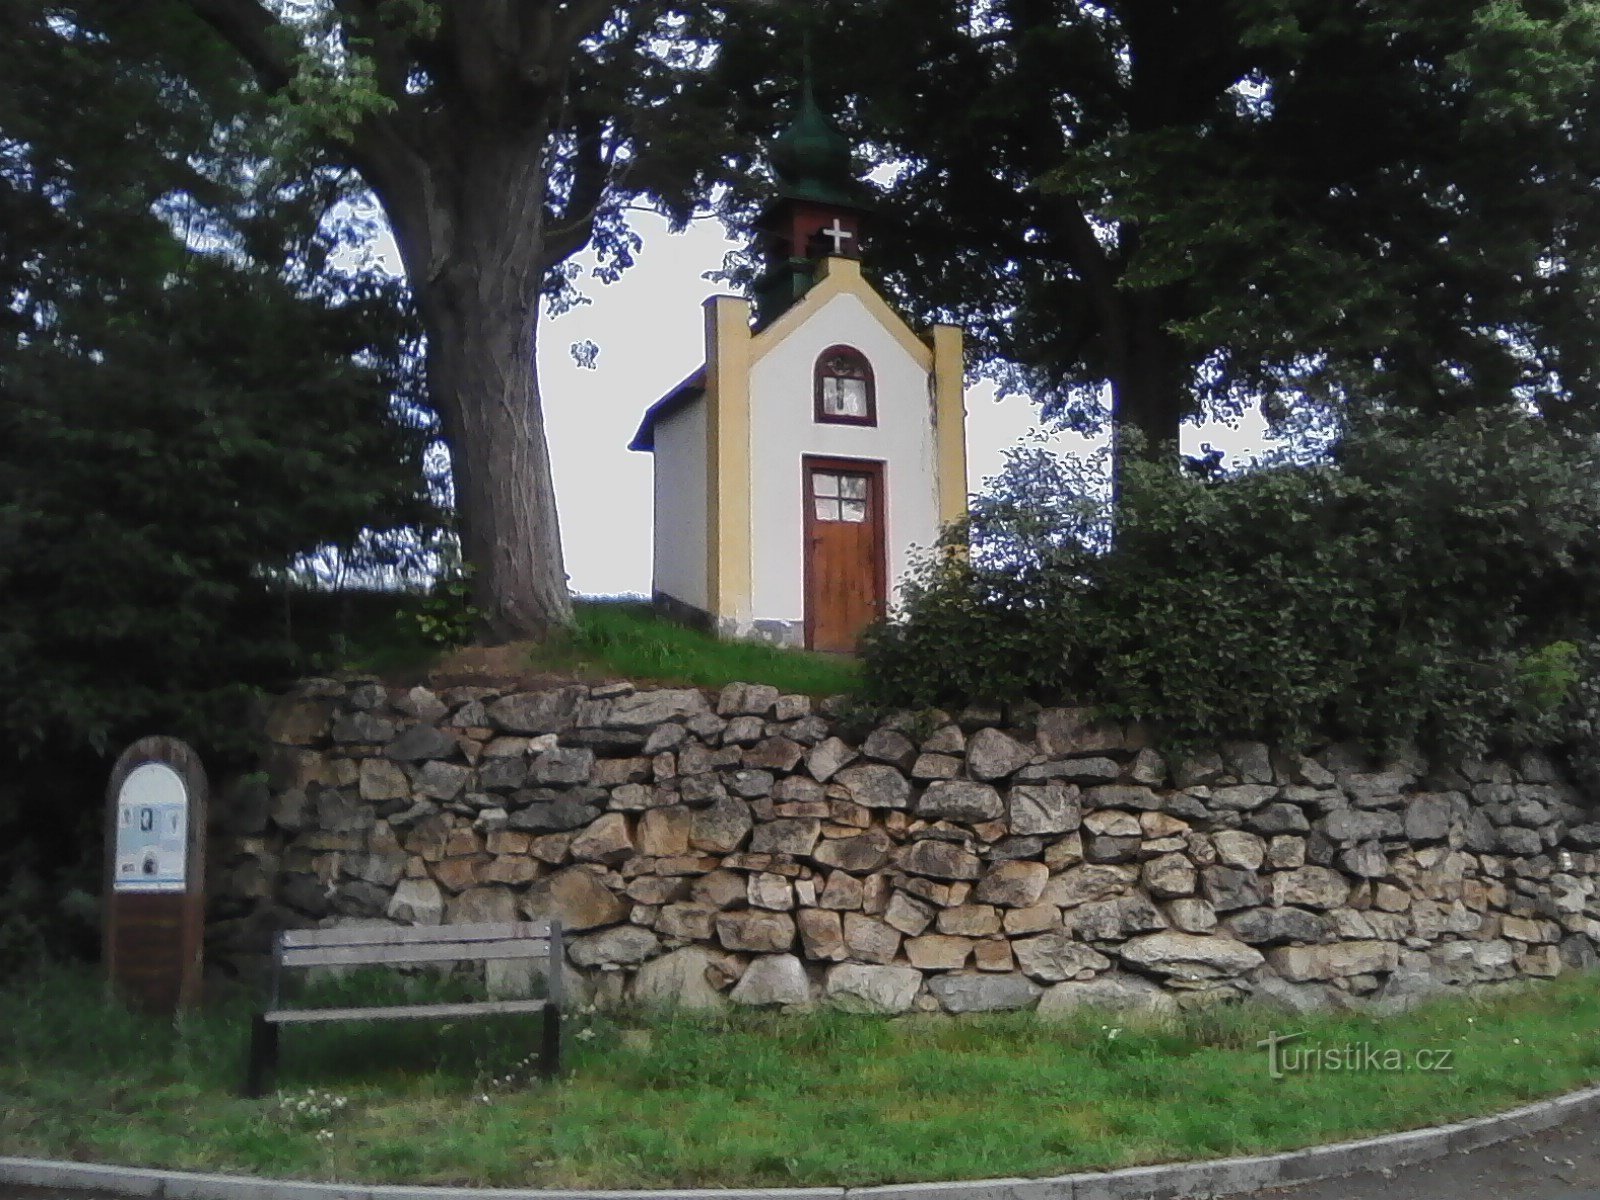 1. Chapel of St. Anna in Uhřice.